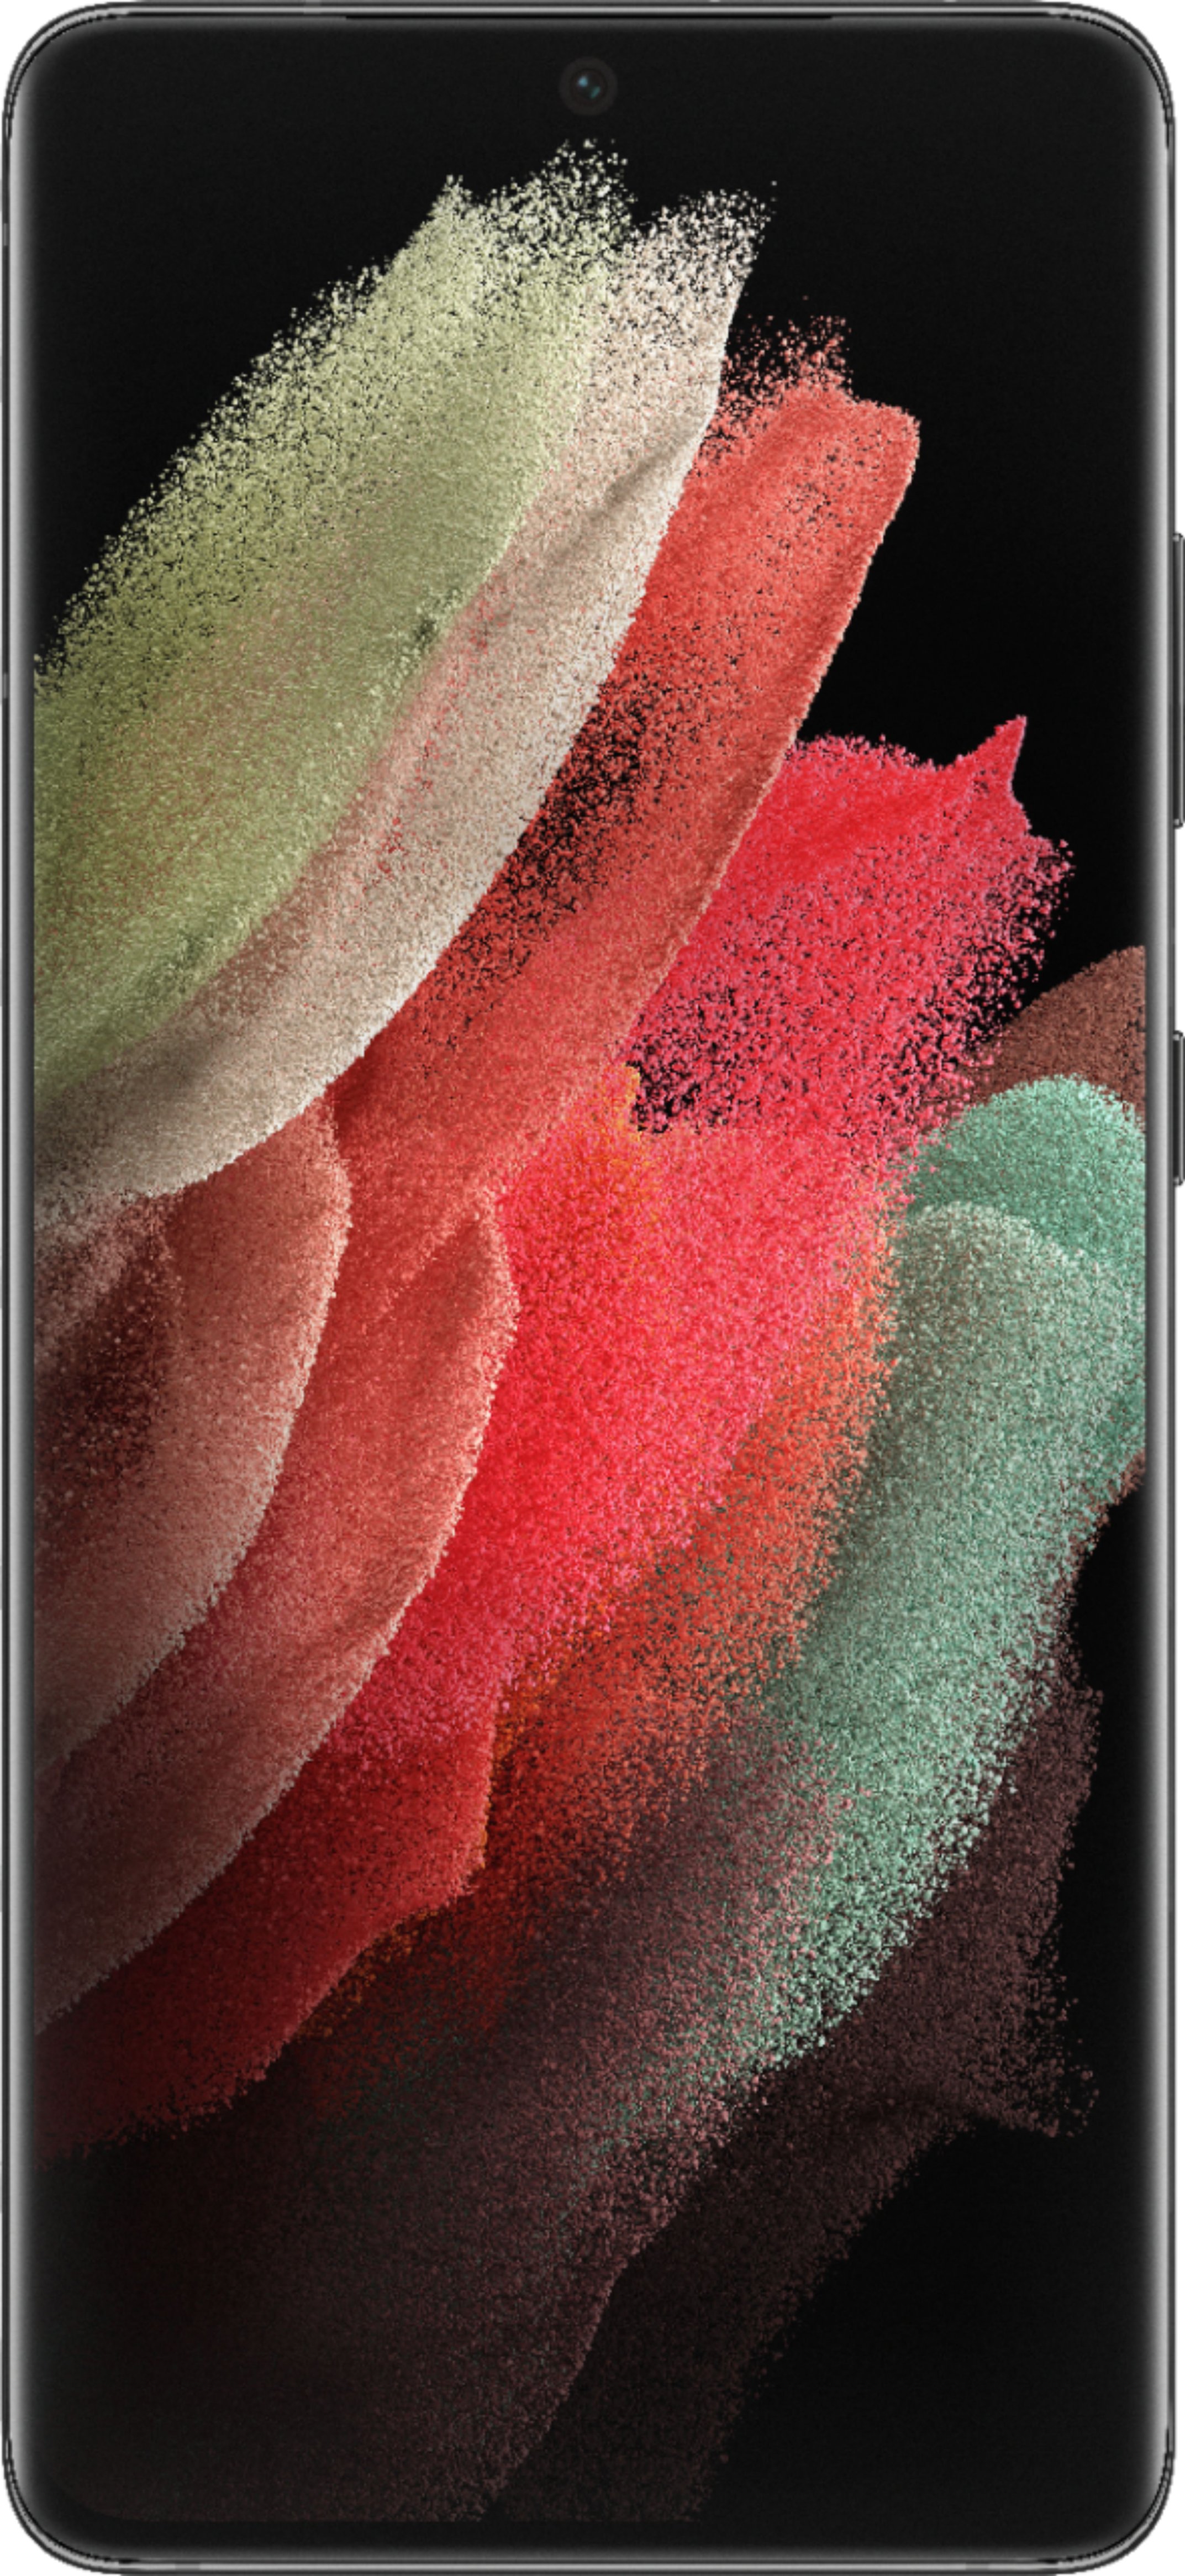 Samsung Galaxy S21 Ultra 5g 128gb Phantom Black Verizon Sm G998uzkavzw Best Buy